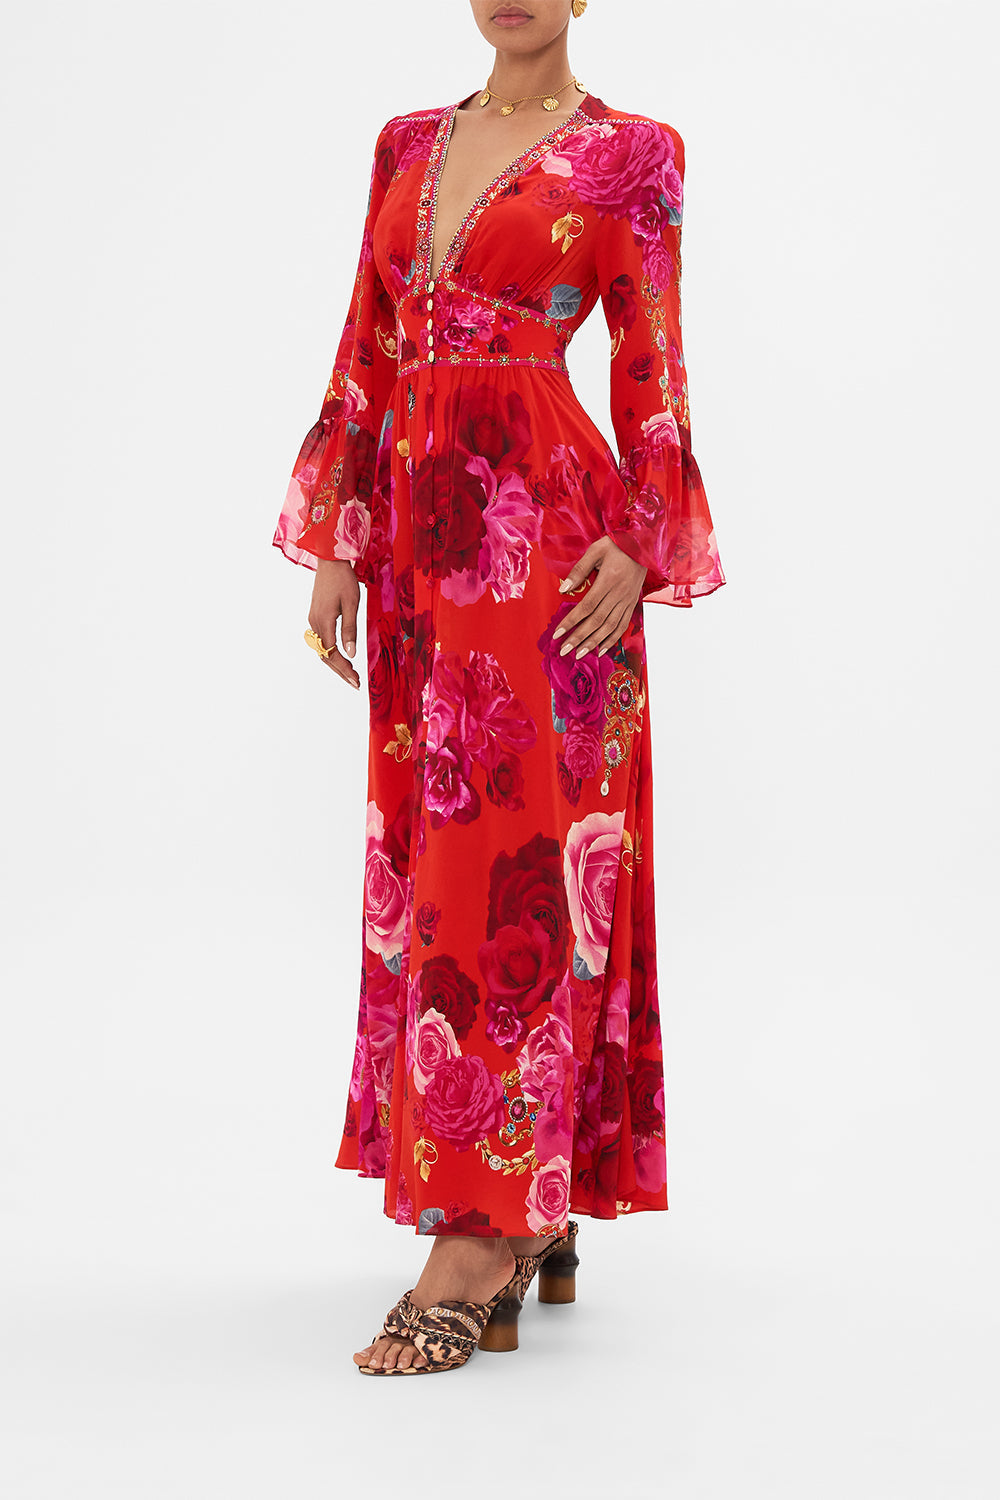 Side view of model wearing designer floral ruffle dress in An Italian Rosa print 